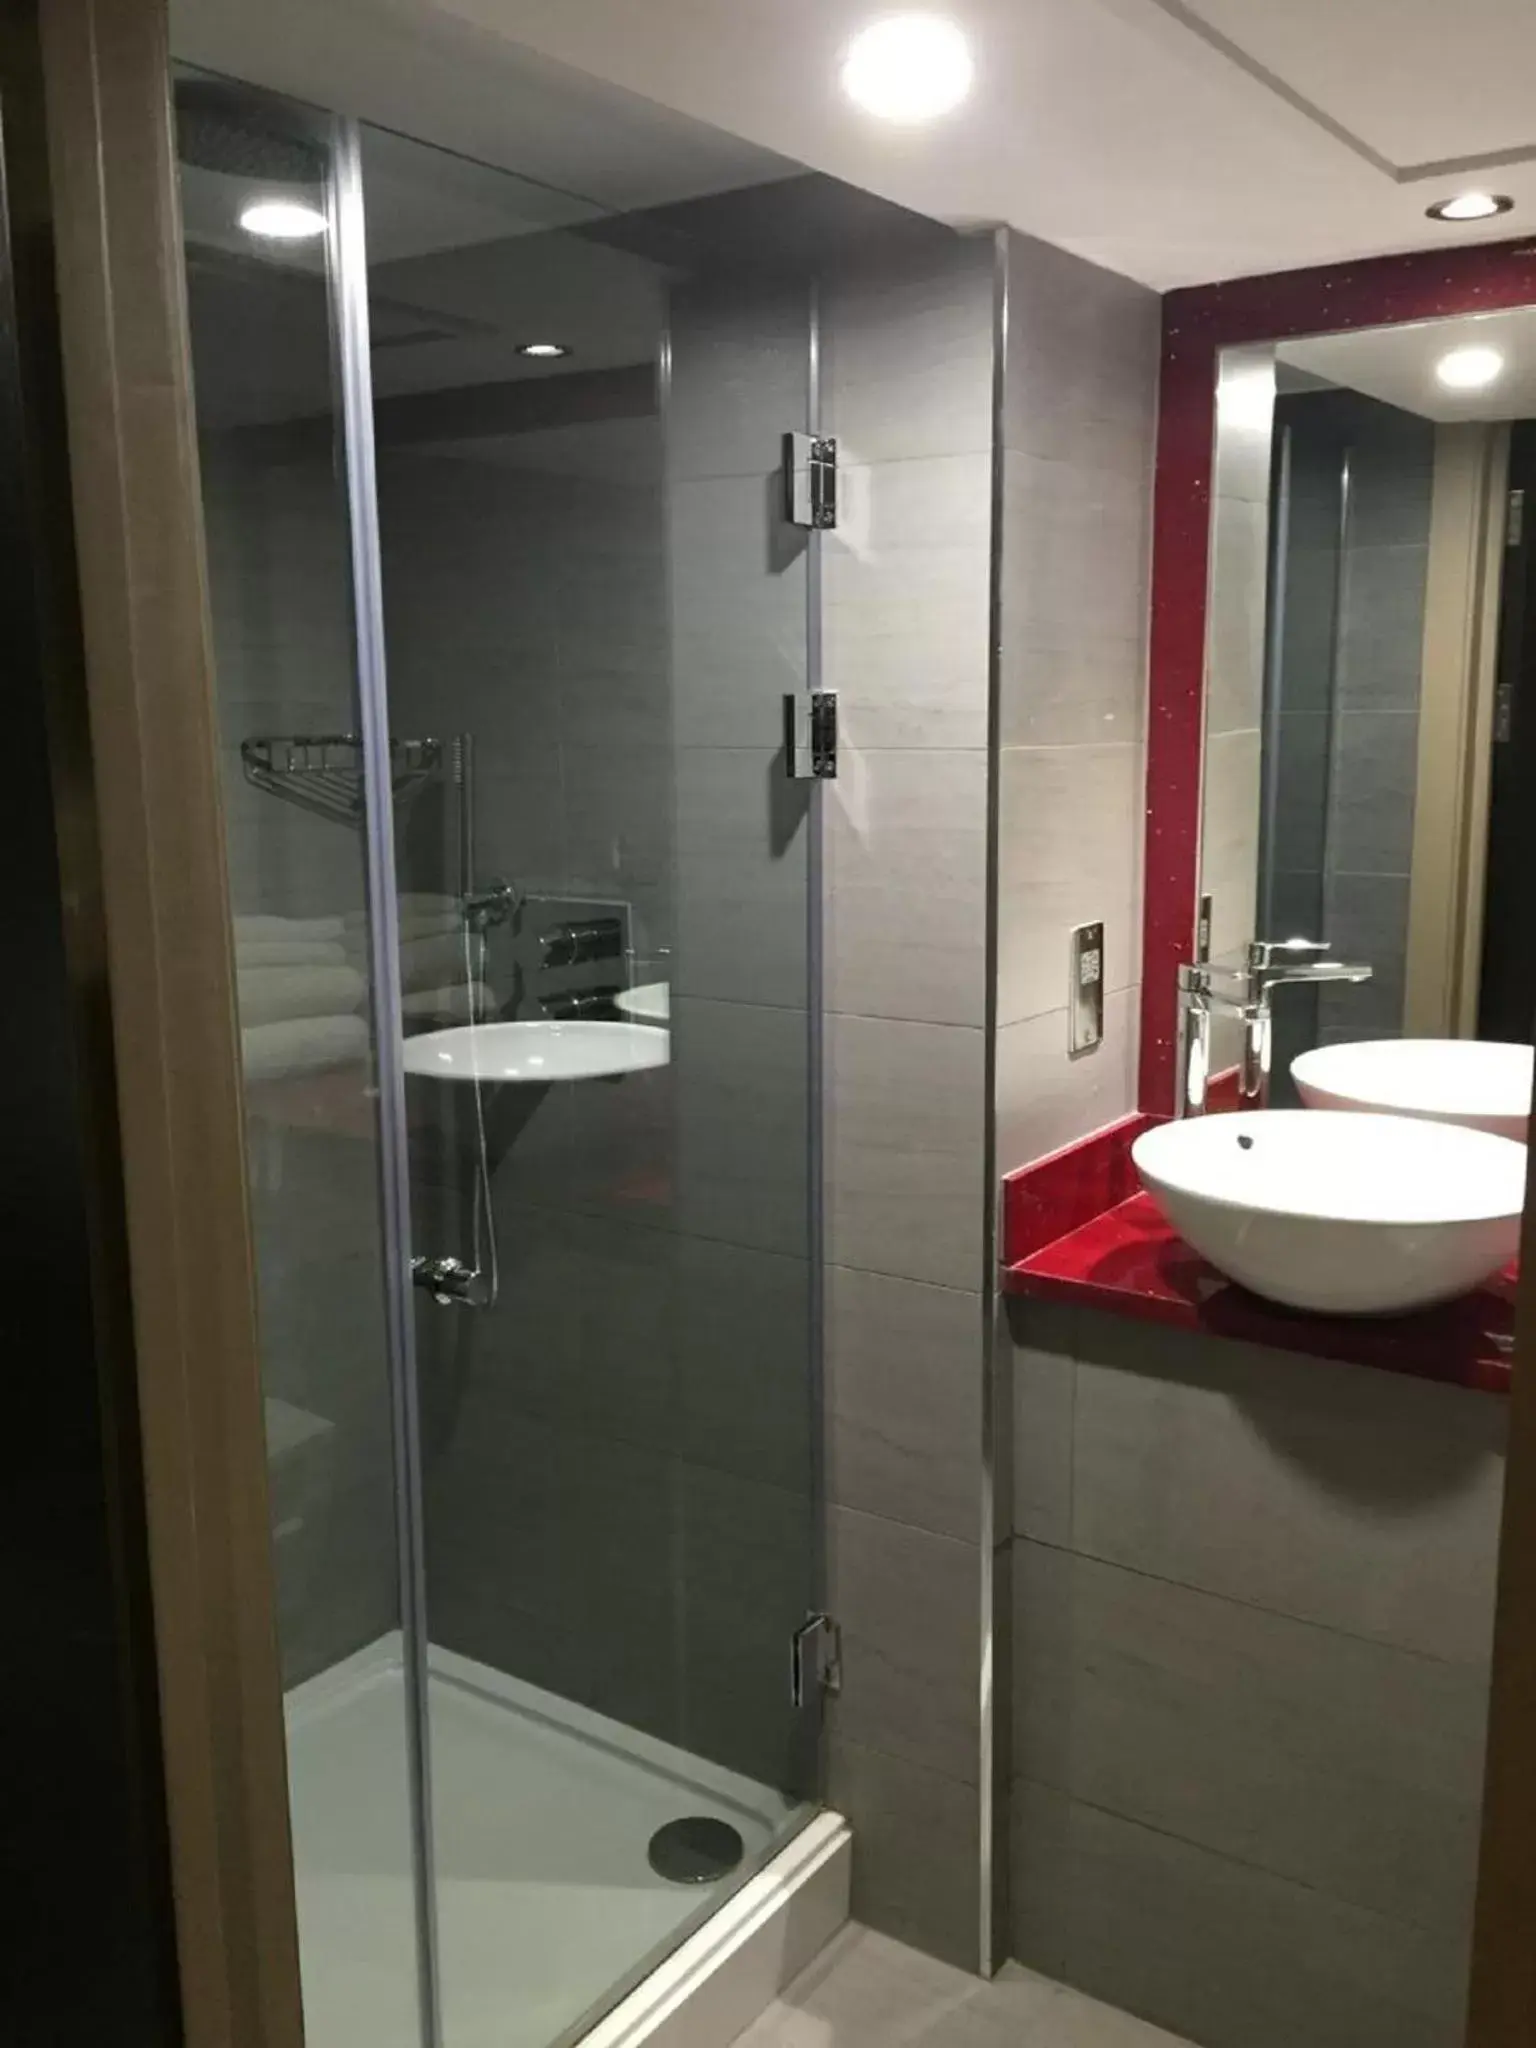 Bathroom in Maitrise Hotel Maida Vale - London